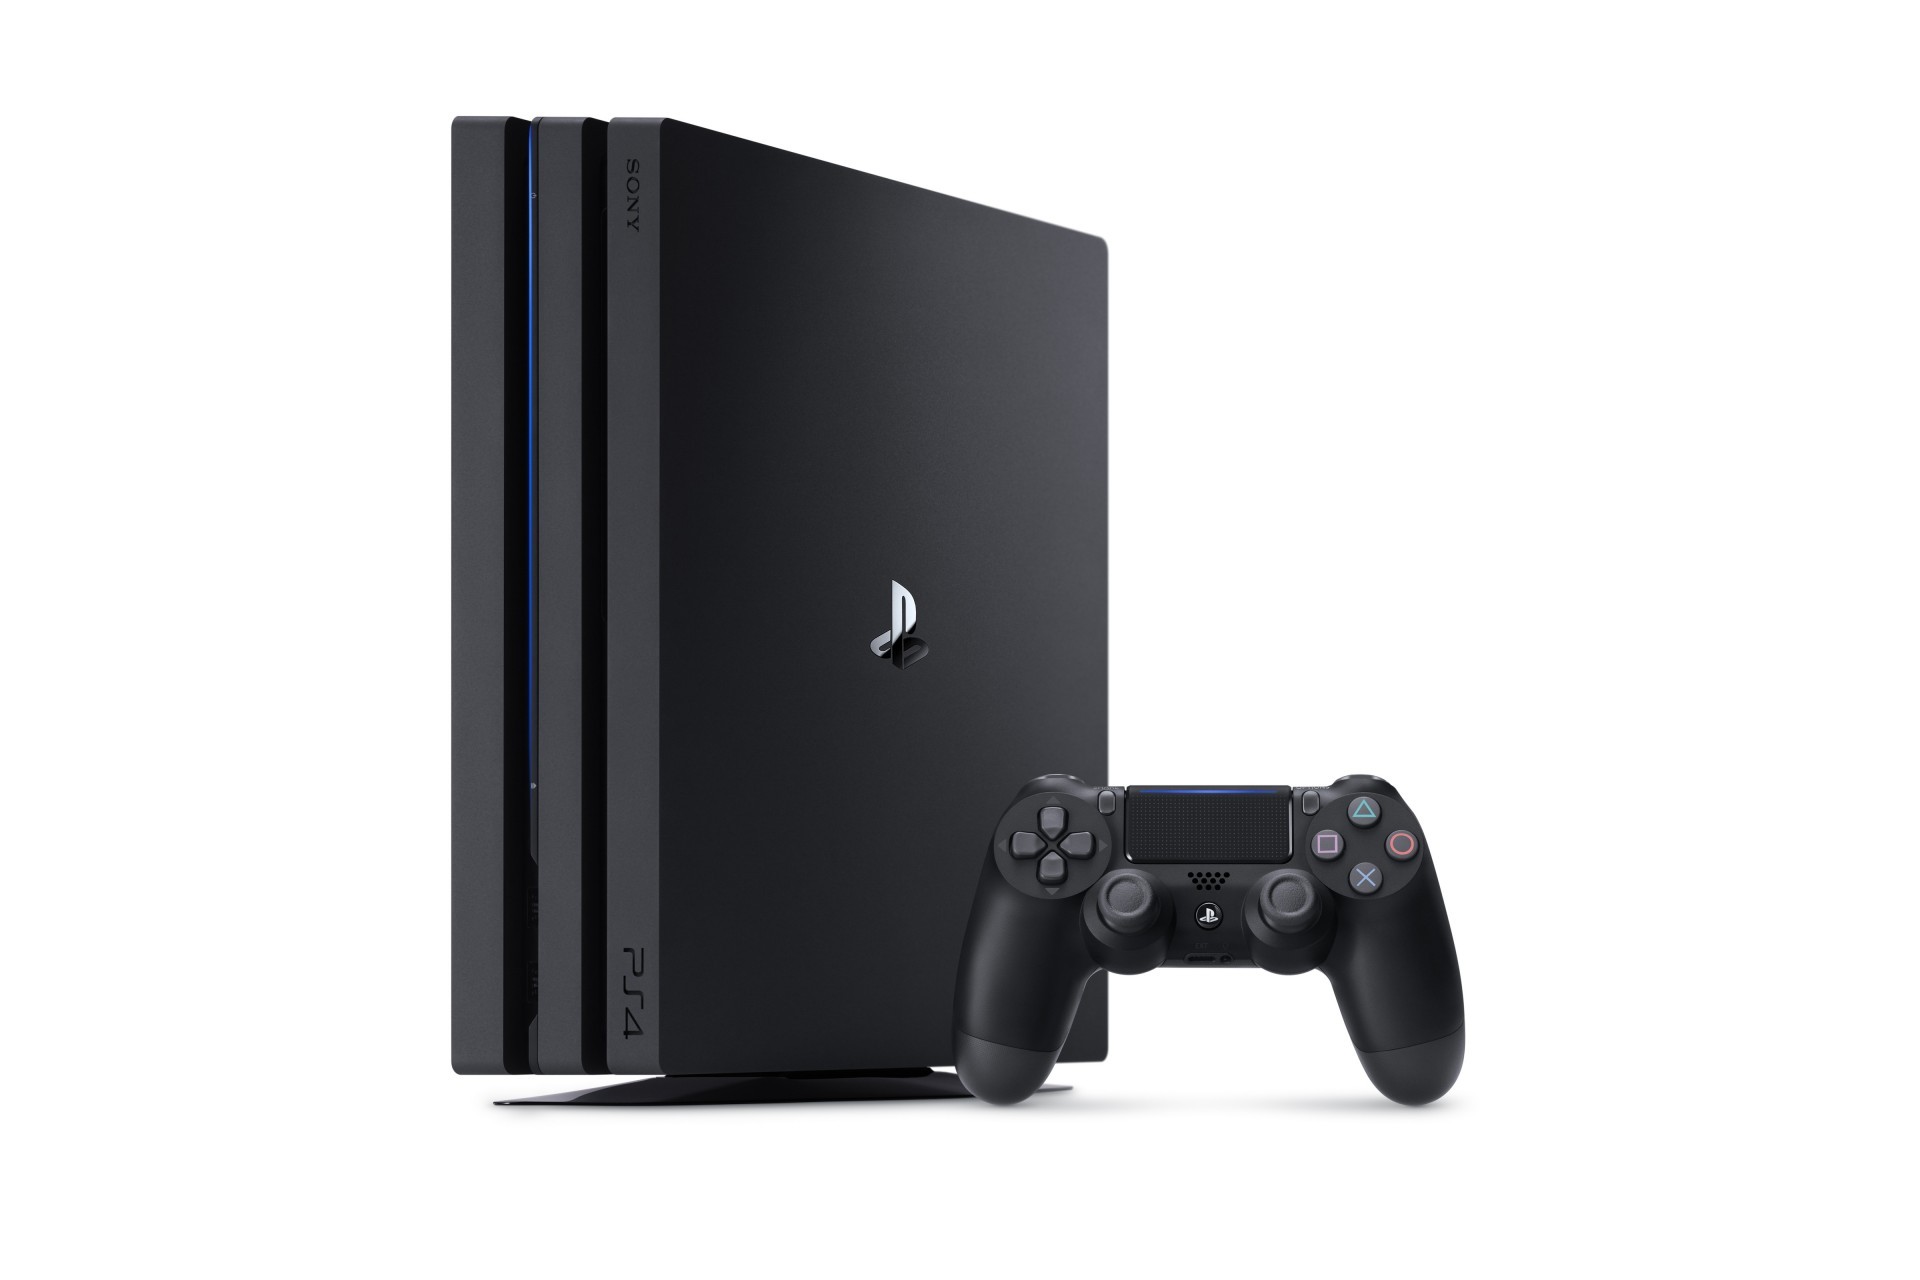 SIE 宣布 PS4 累計銷售超過 1 億 1210 萬台 計畫將本家製作遊戲擴展到 PC 平台